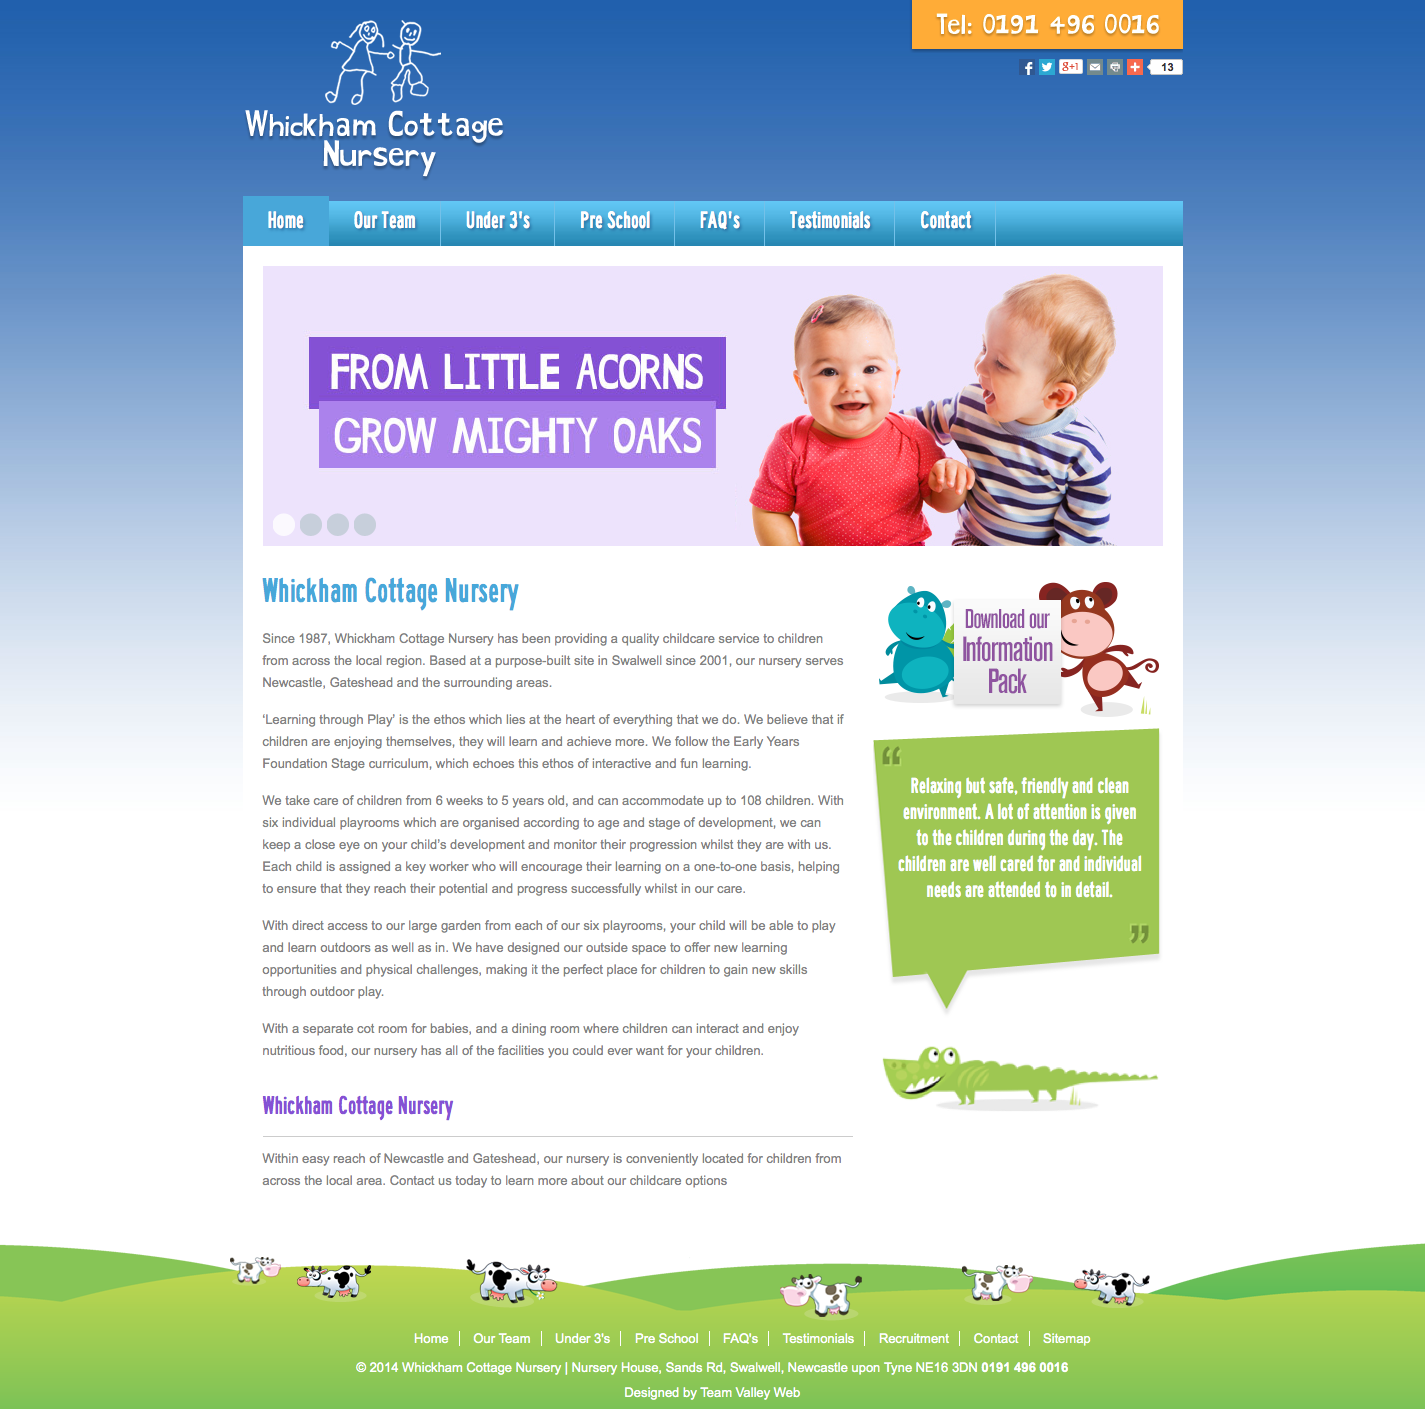 Whickham Cottage Nursery website design